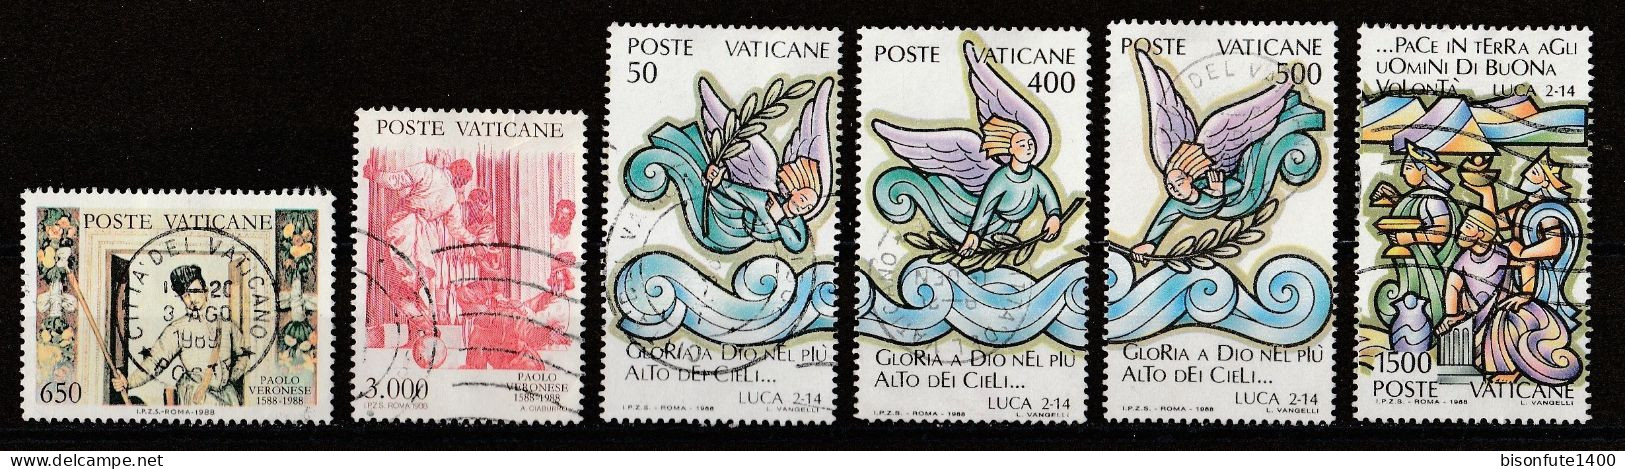 Vatican 1988 : Timbres Yvert & Tellier N° 841 - 842 - 843 - 844 - 845 Et 848 Oblitérés. - Used Stamps